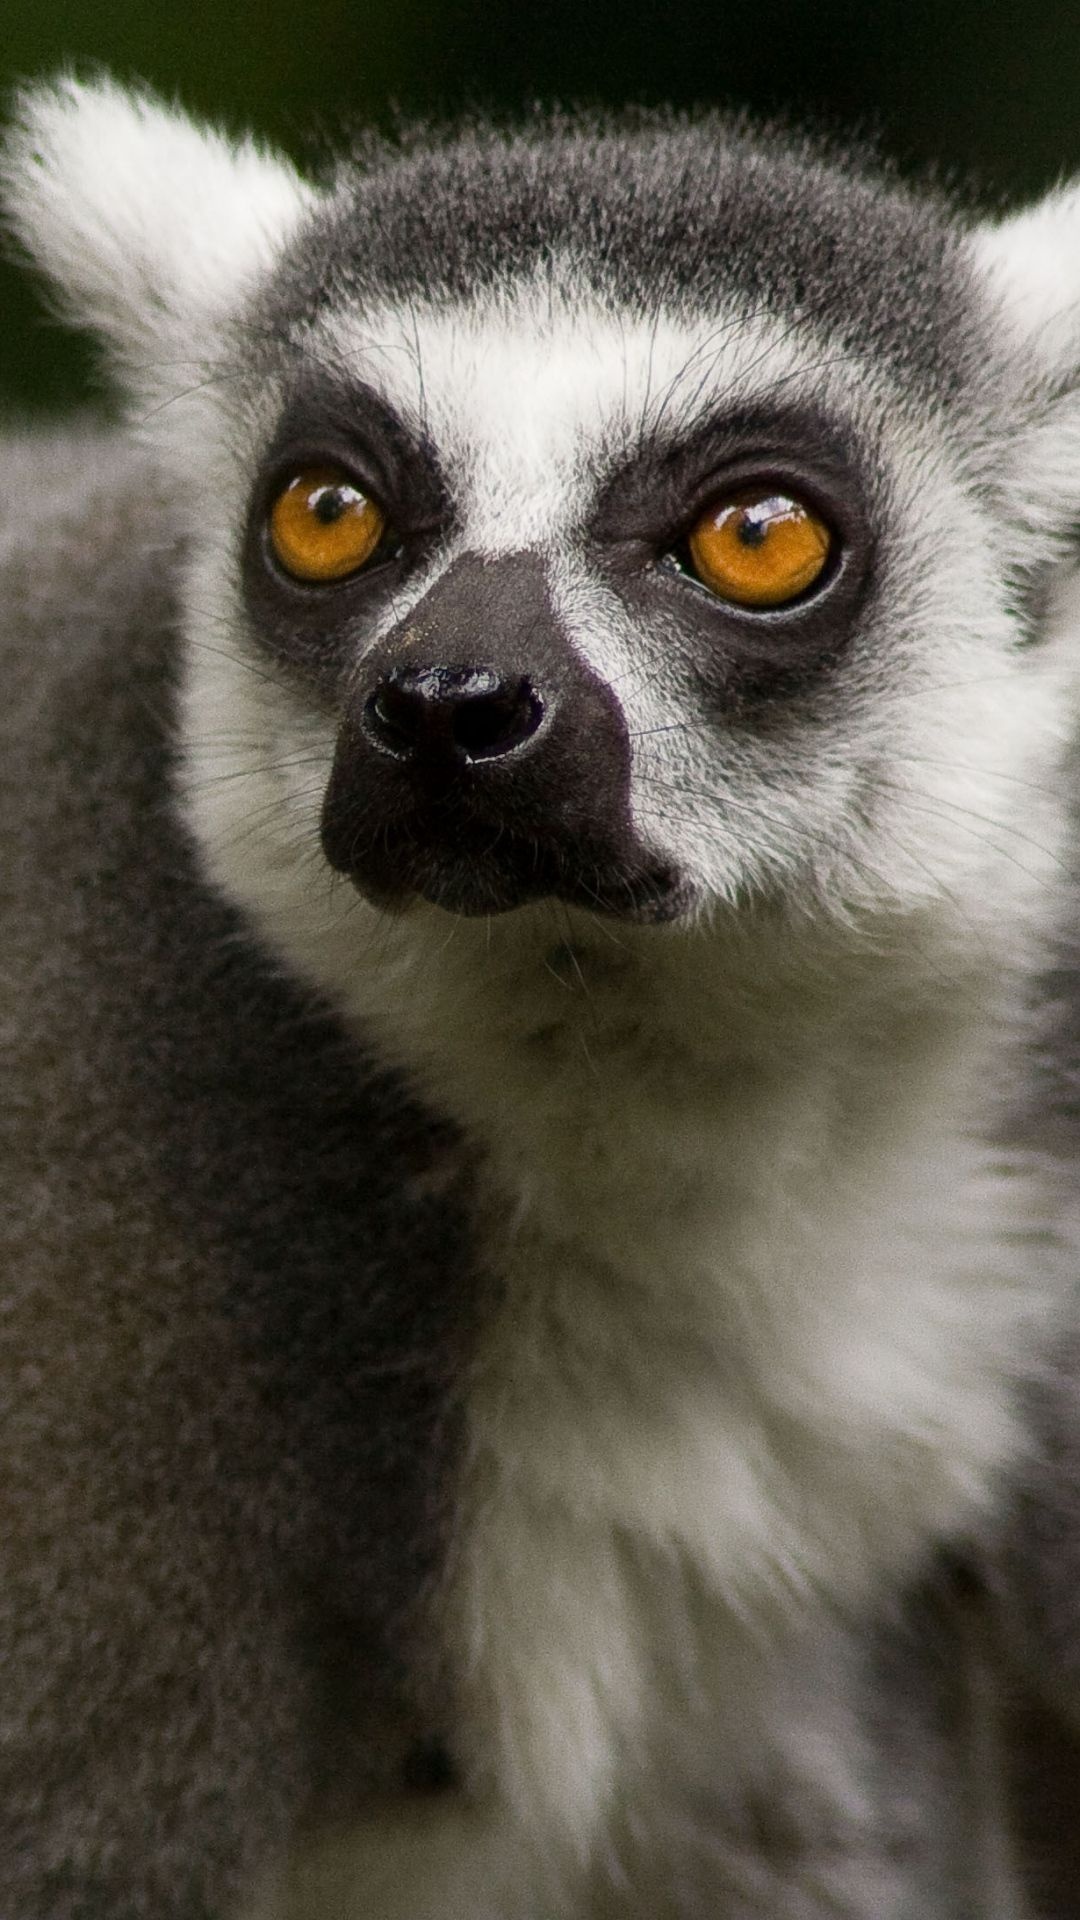 Lemur face wallpaper, Animal eyes, Sony Xperia Z1 background, Cute animals, 1080x1920 Full HD Phone